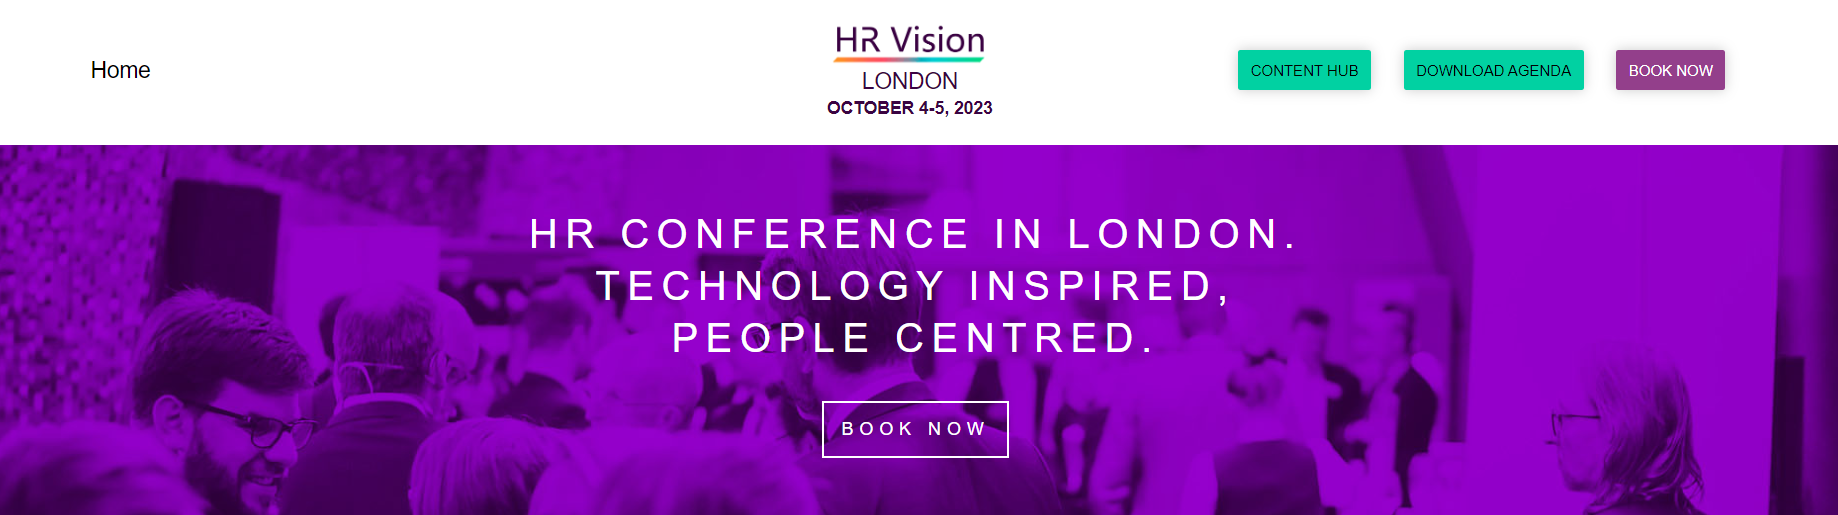 HR vision London.png